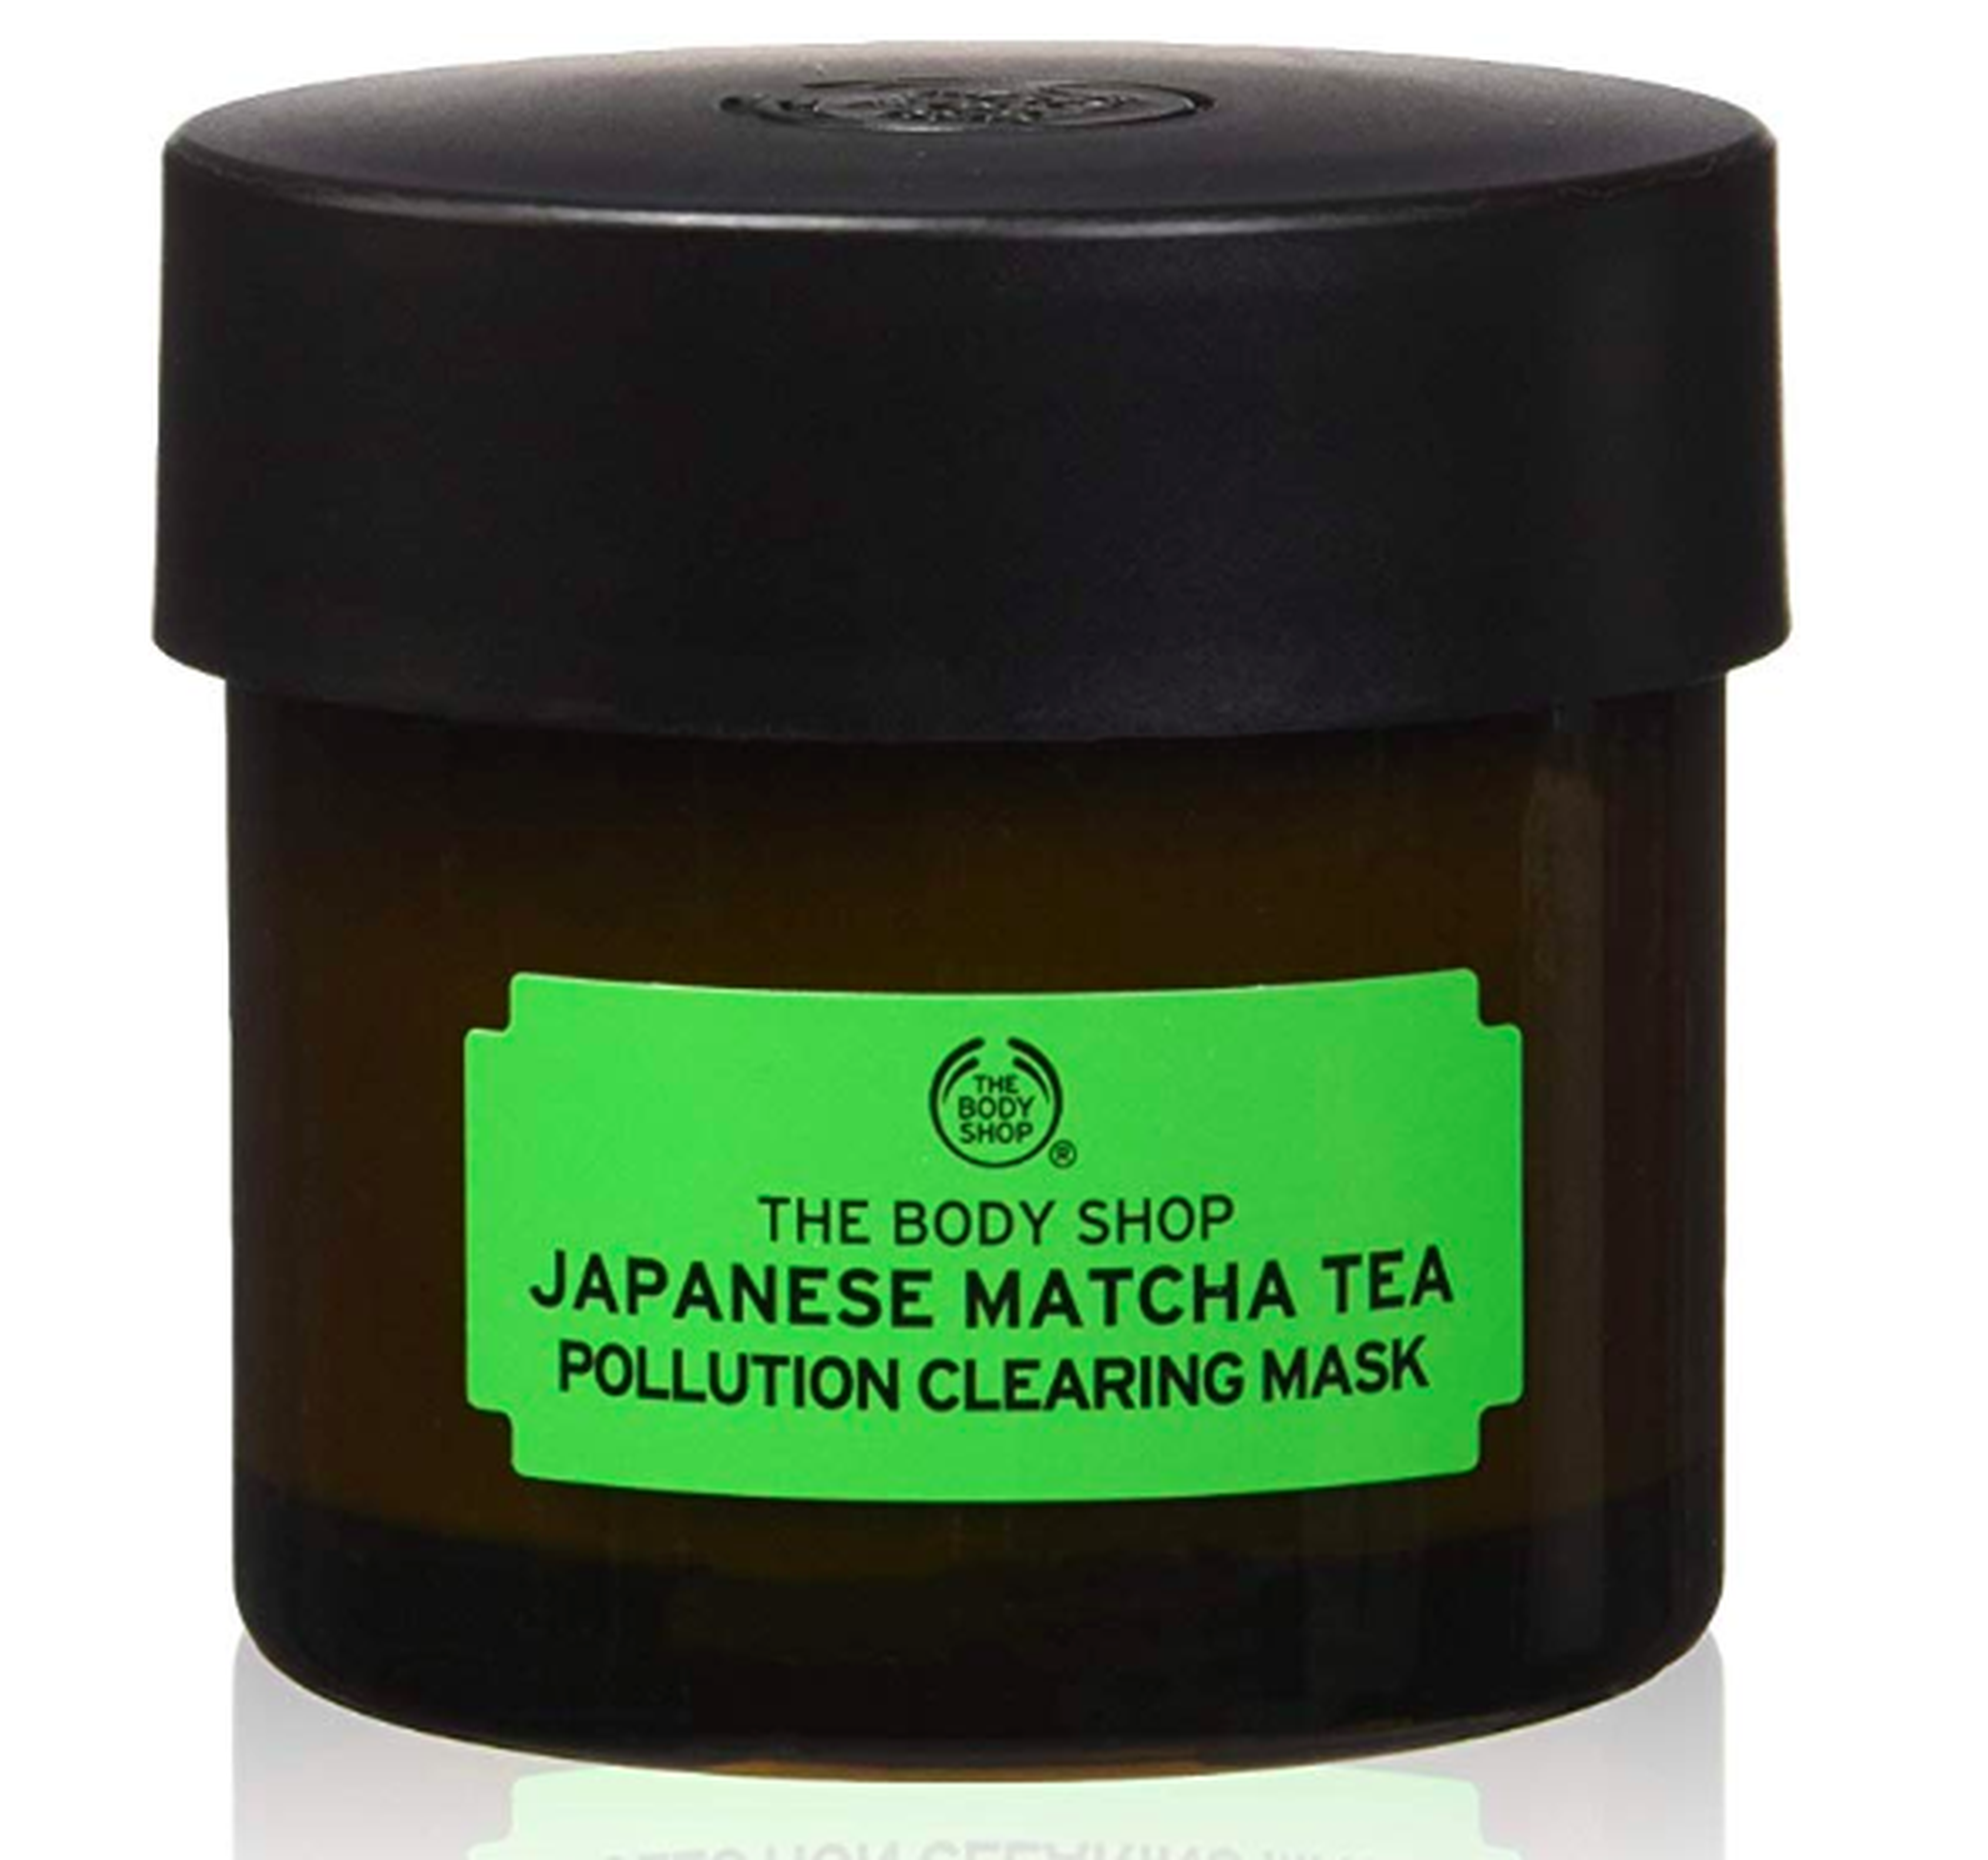 Mascarilla Japanese Matcha Tea de The Body Shop.